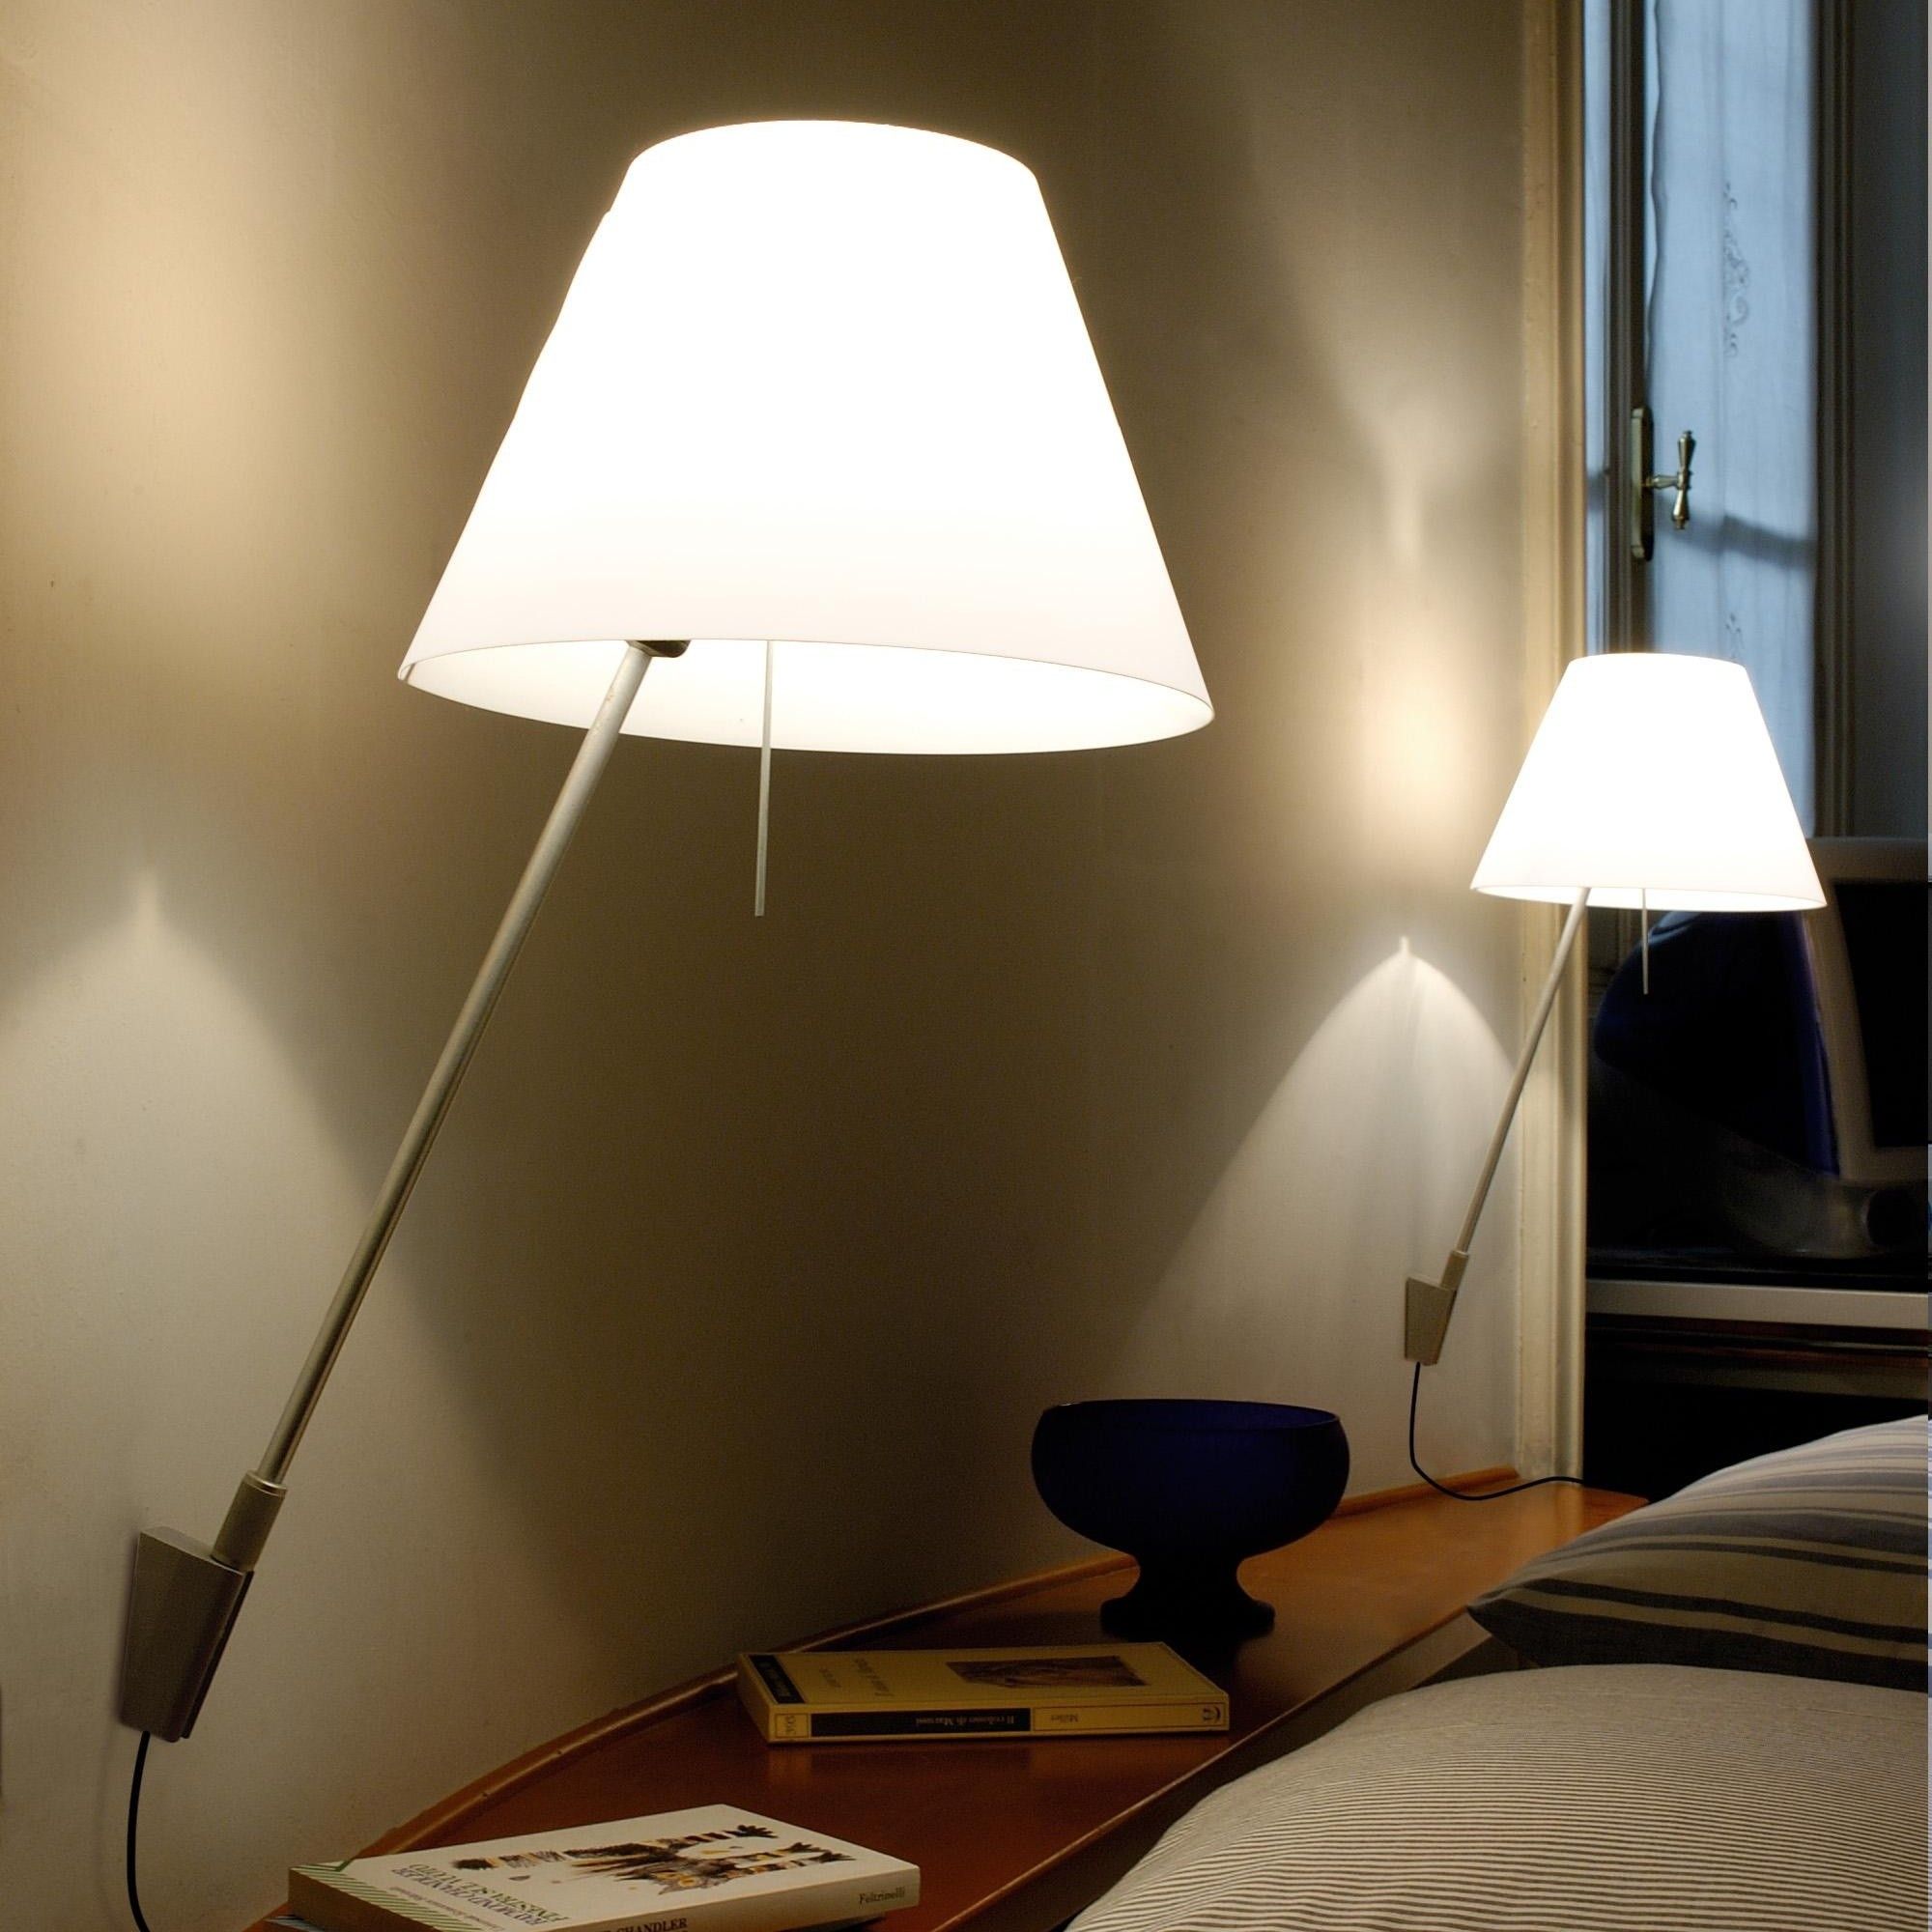 Costanzina Wall lamp by Luceplan